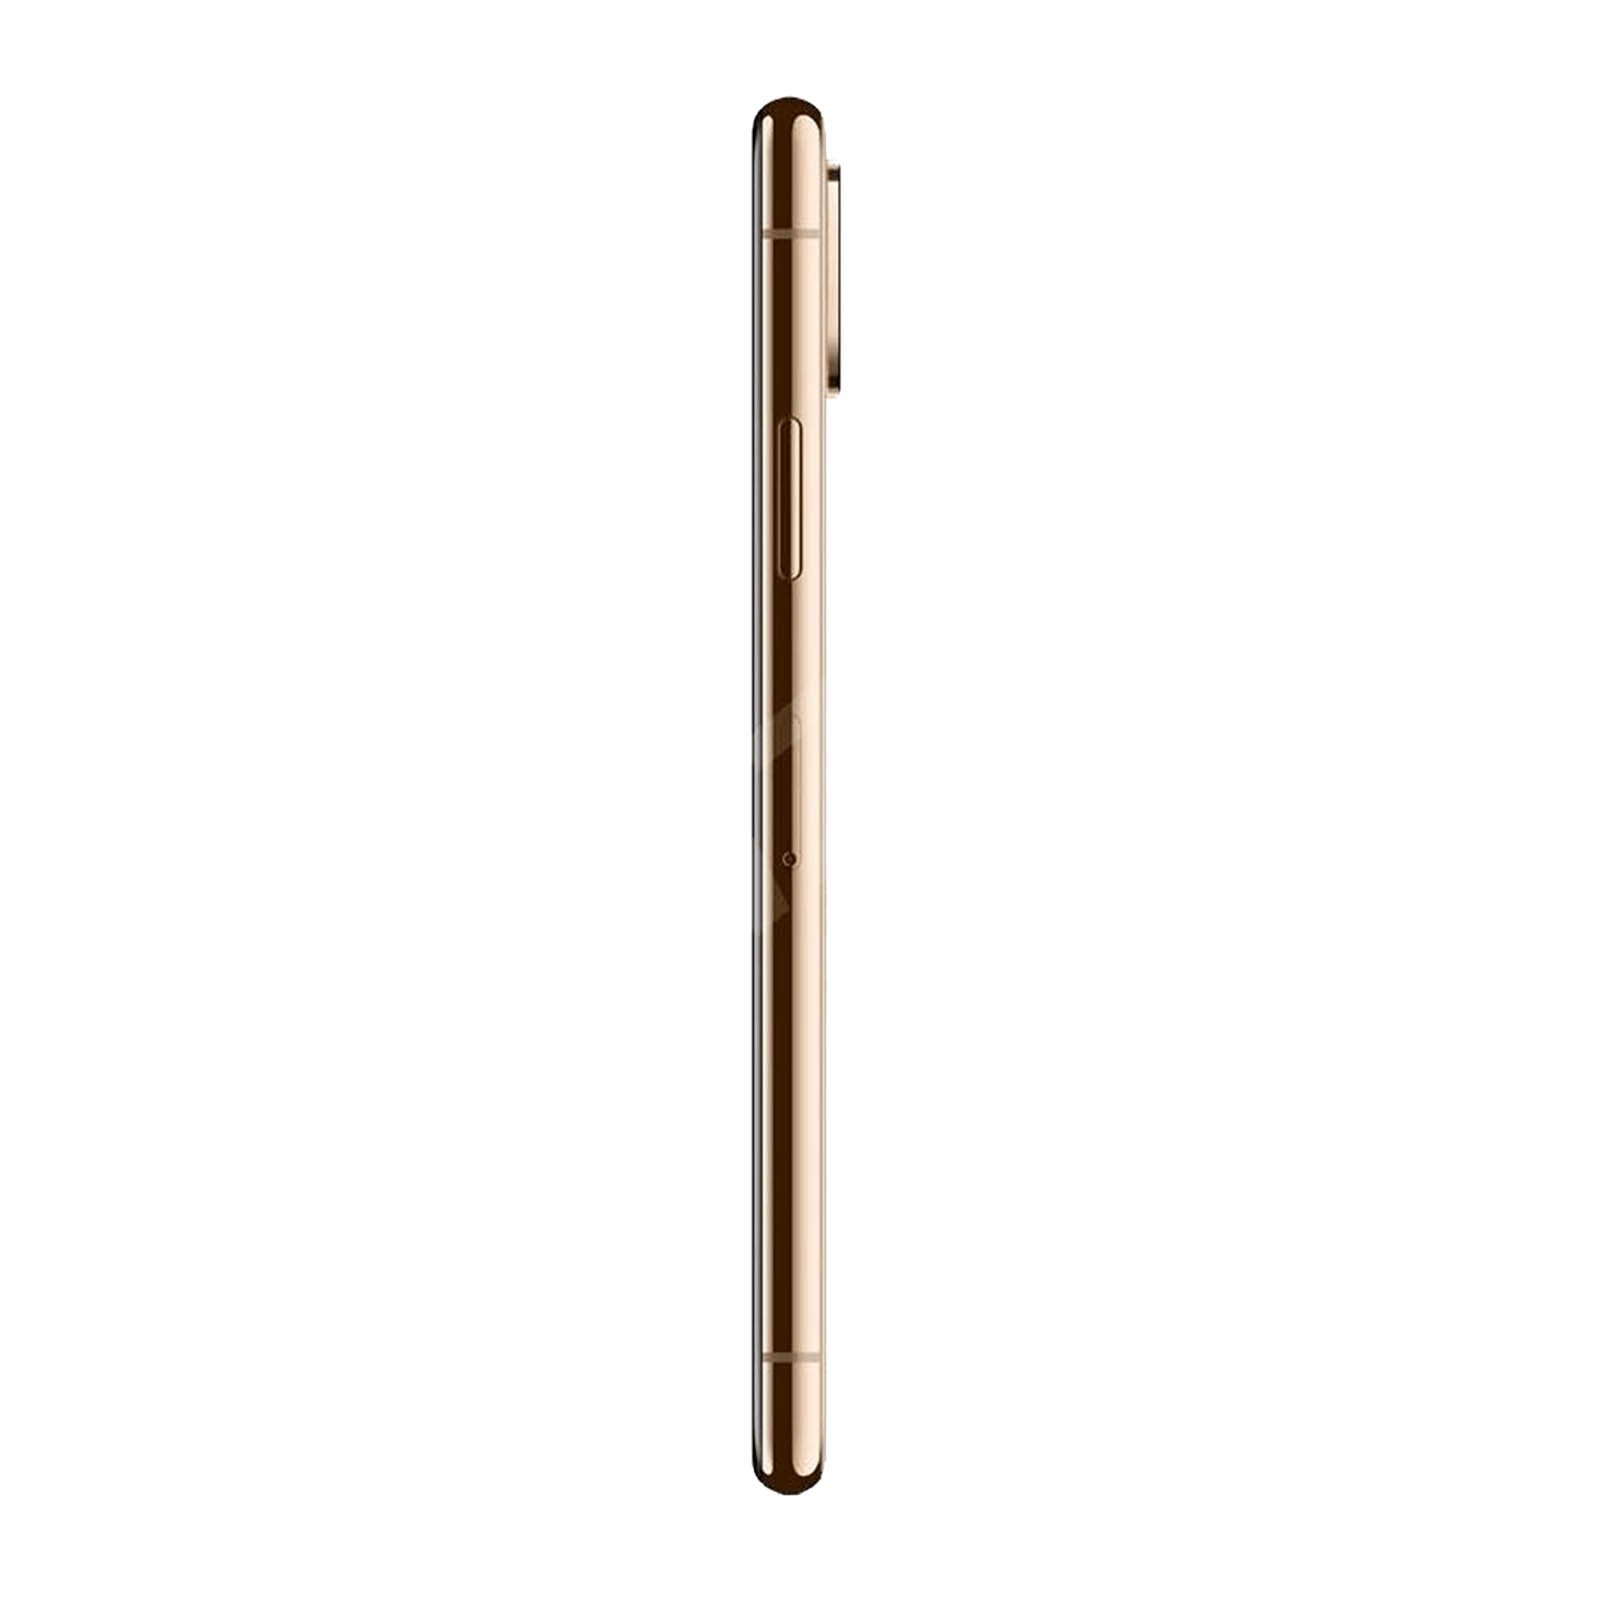 Apple iPhone XS Max 512GB Gold Pristine - Unlocked